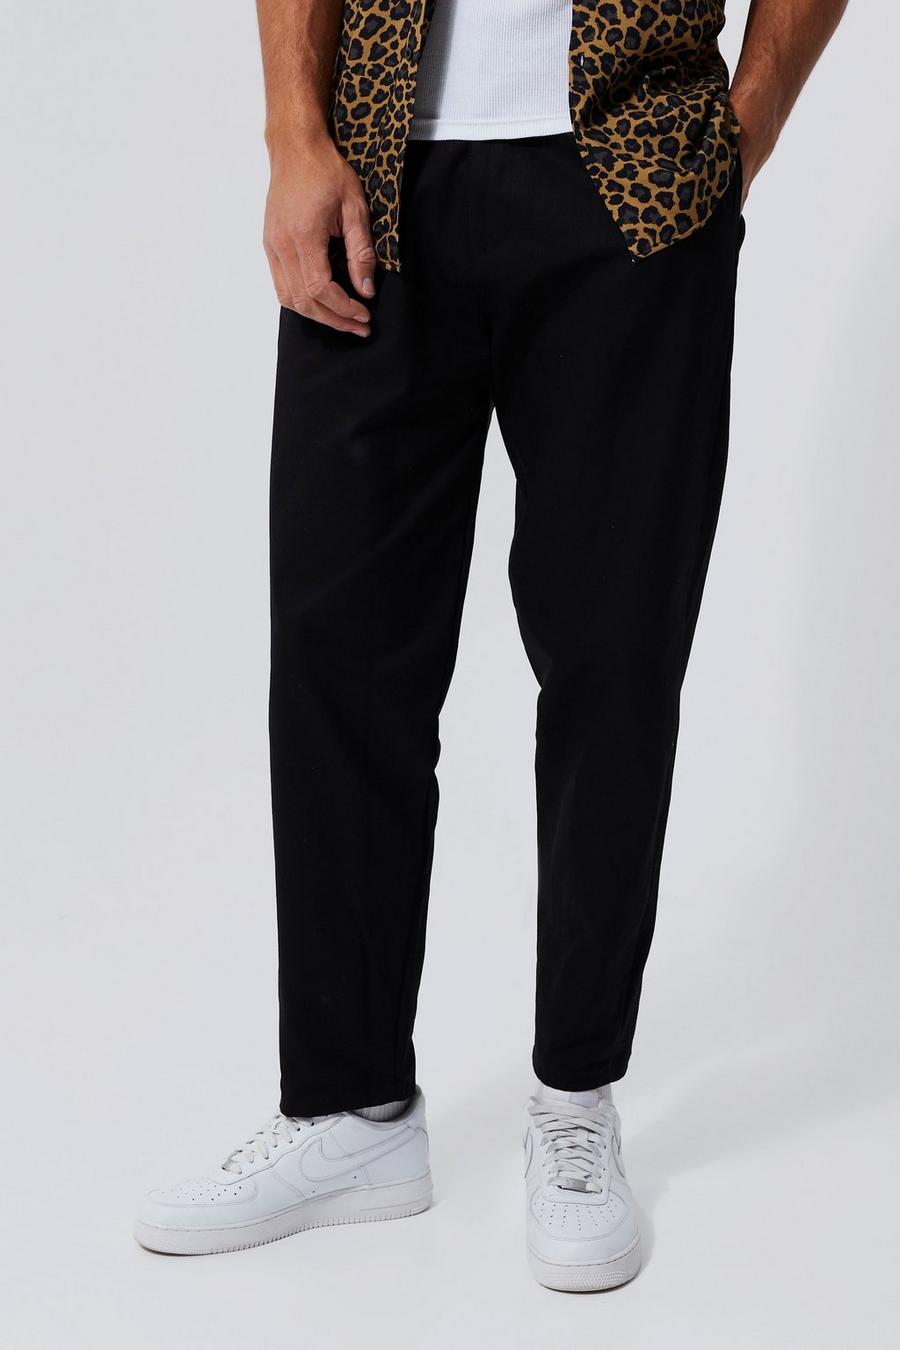 Pantaloni Chino Tall Smart extra comodi, Black negro